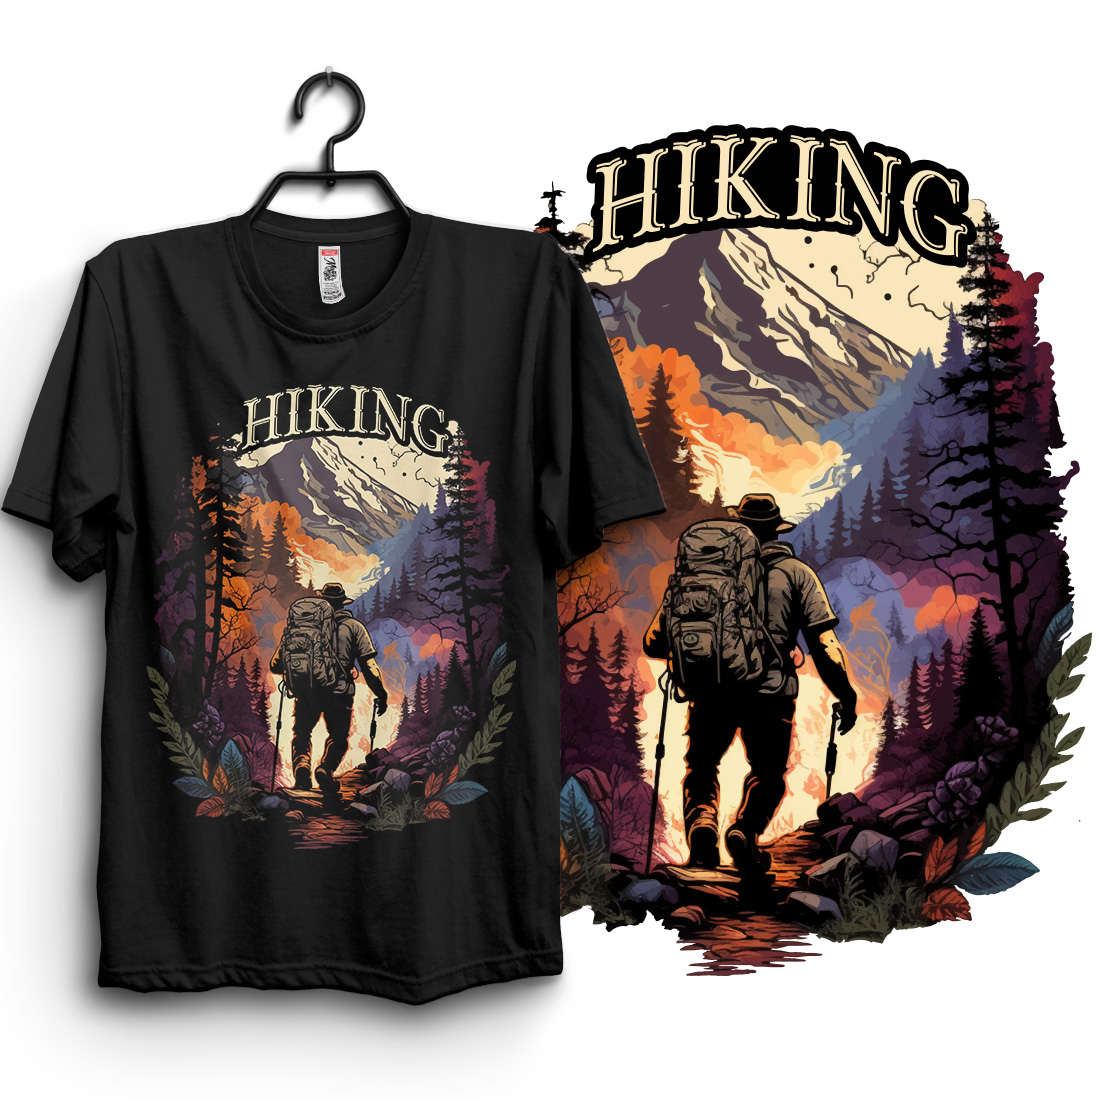 Hiking T-shirt Design, Best Hiking t shirt, Hiking mountain forest retro vintage t shirt design, Adventure, travel, hiking cover image.